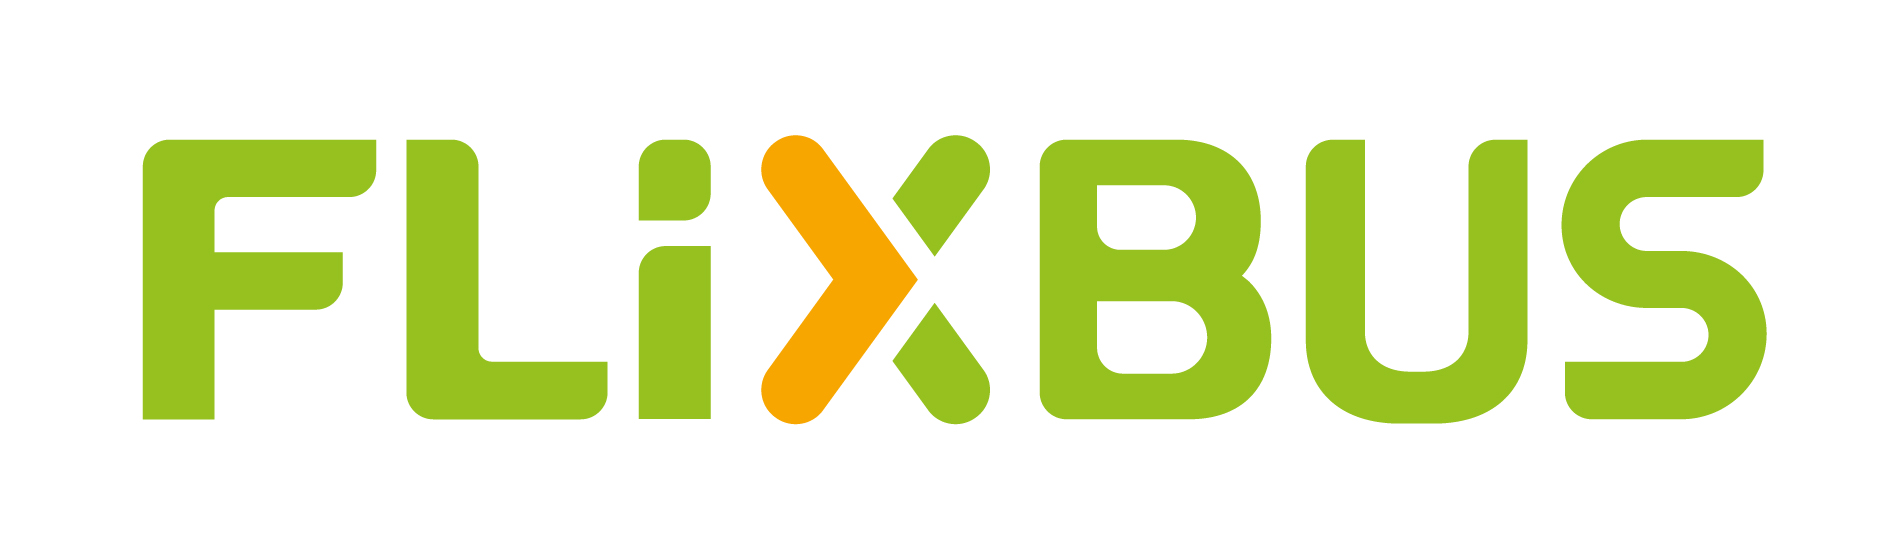 FlixBus logo